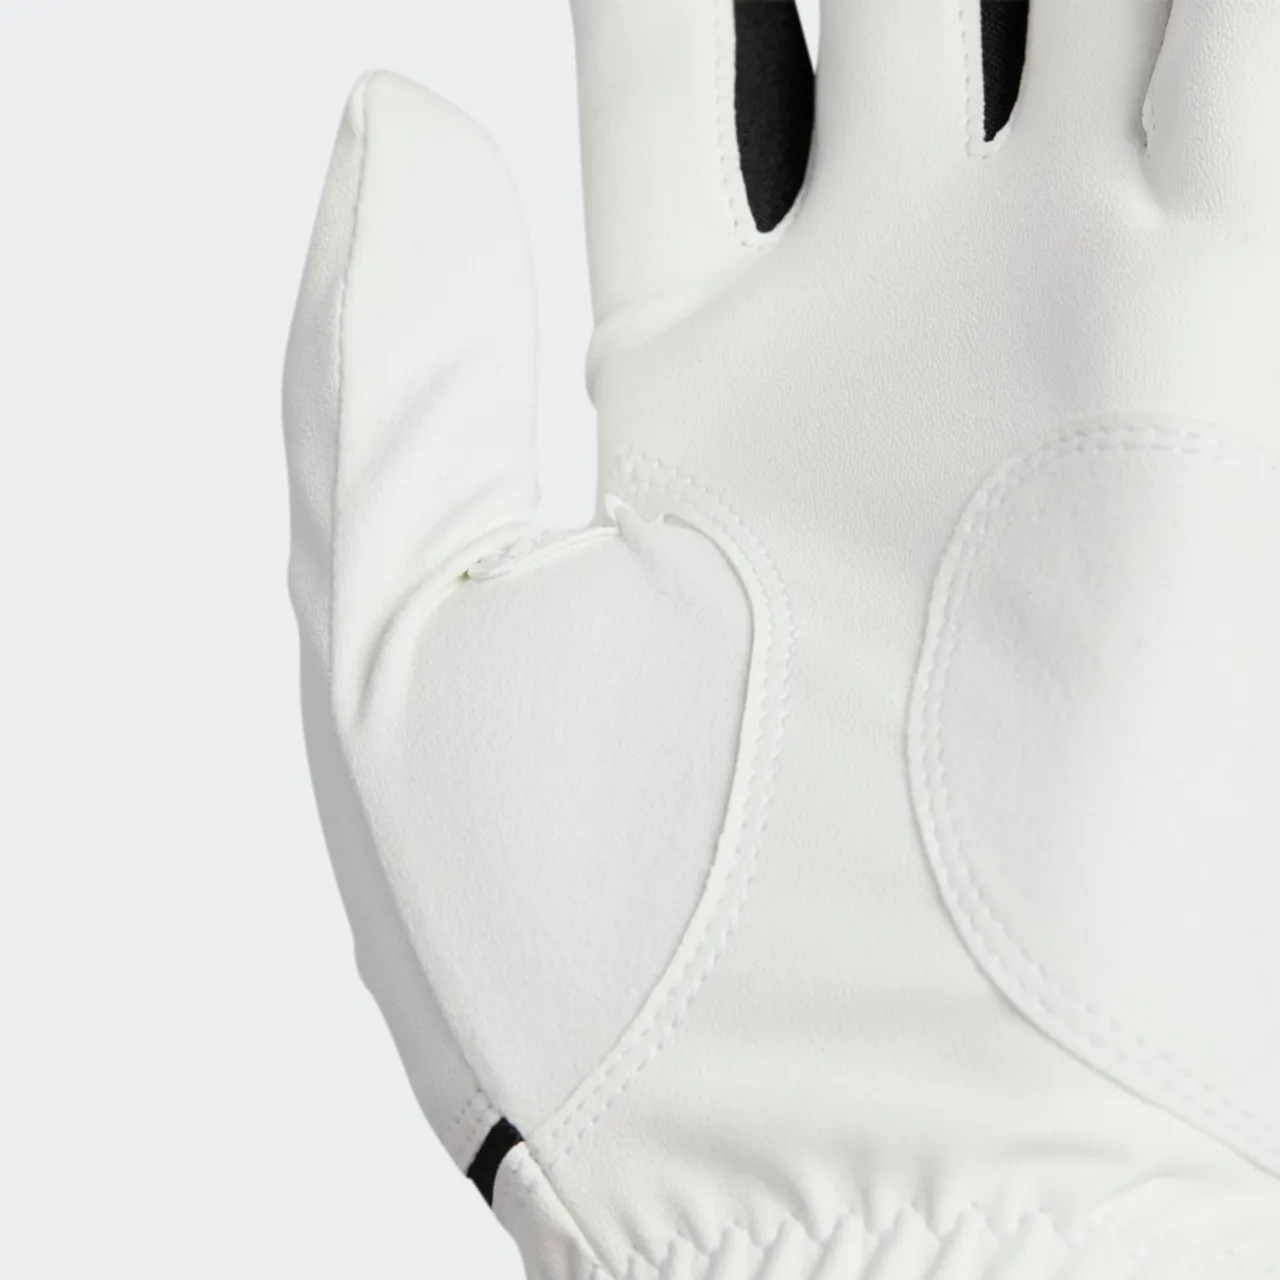 Aditech 22 Golf Glove Single